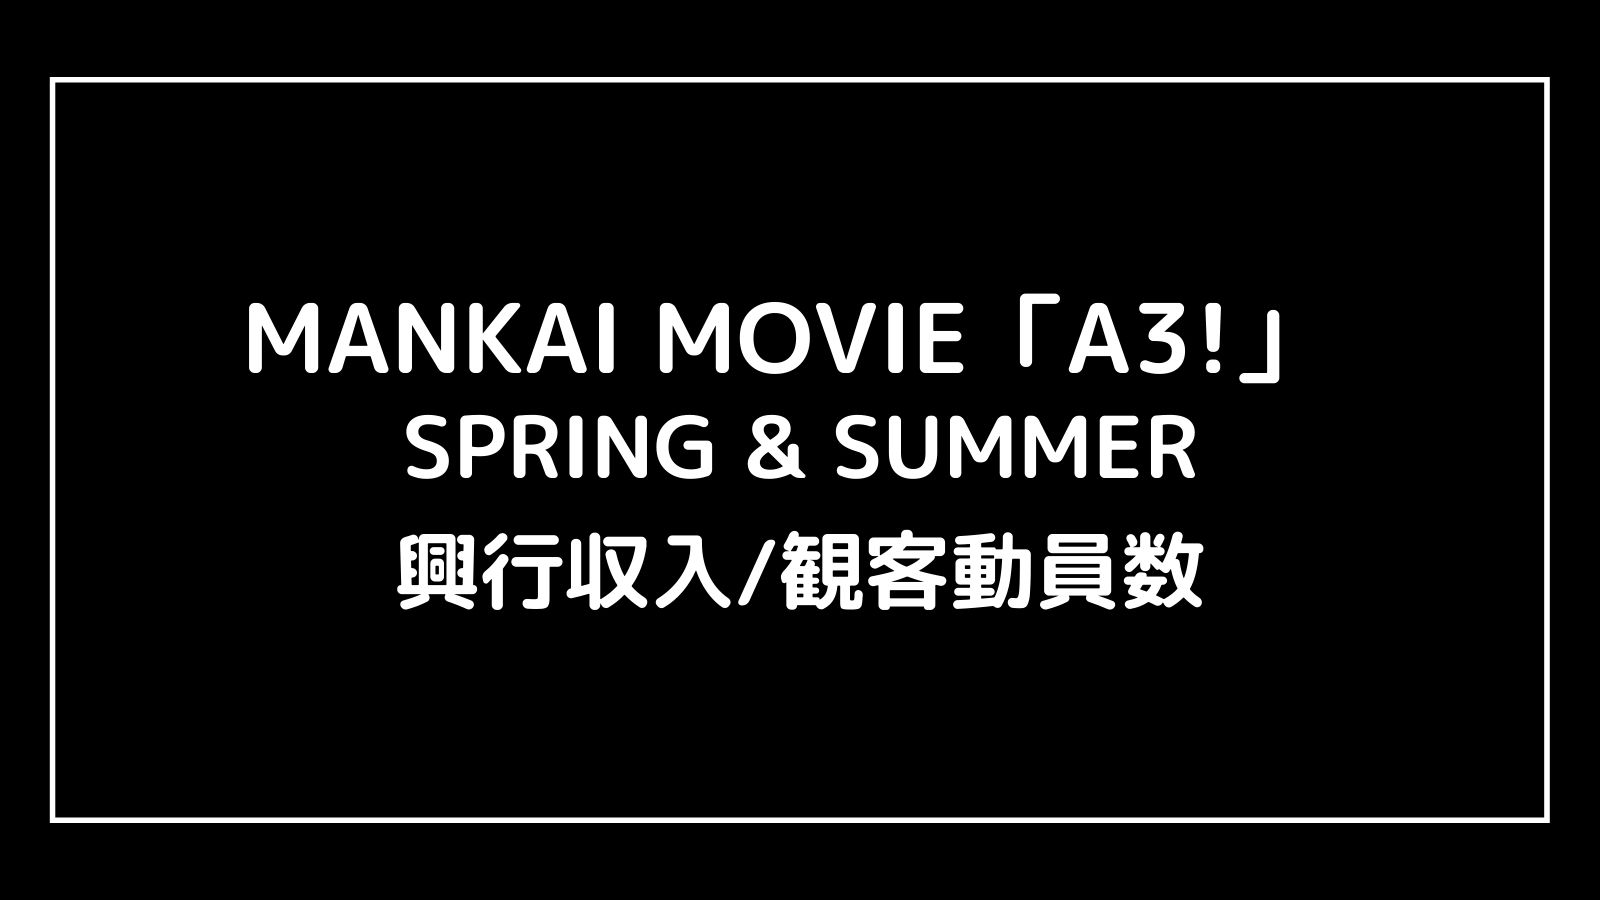 MANKAI MOVIE「A3!」映画の興行収入推移と最終興収を元映画館社員が予想【SPRING & SUMMER／AUTUMN & WINTER】